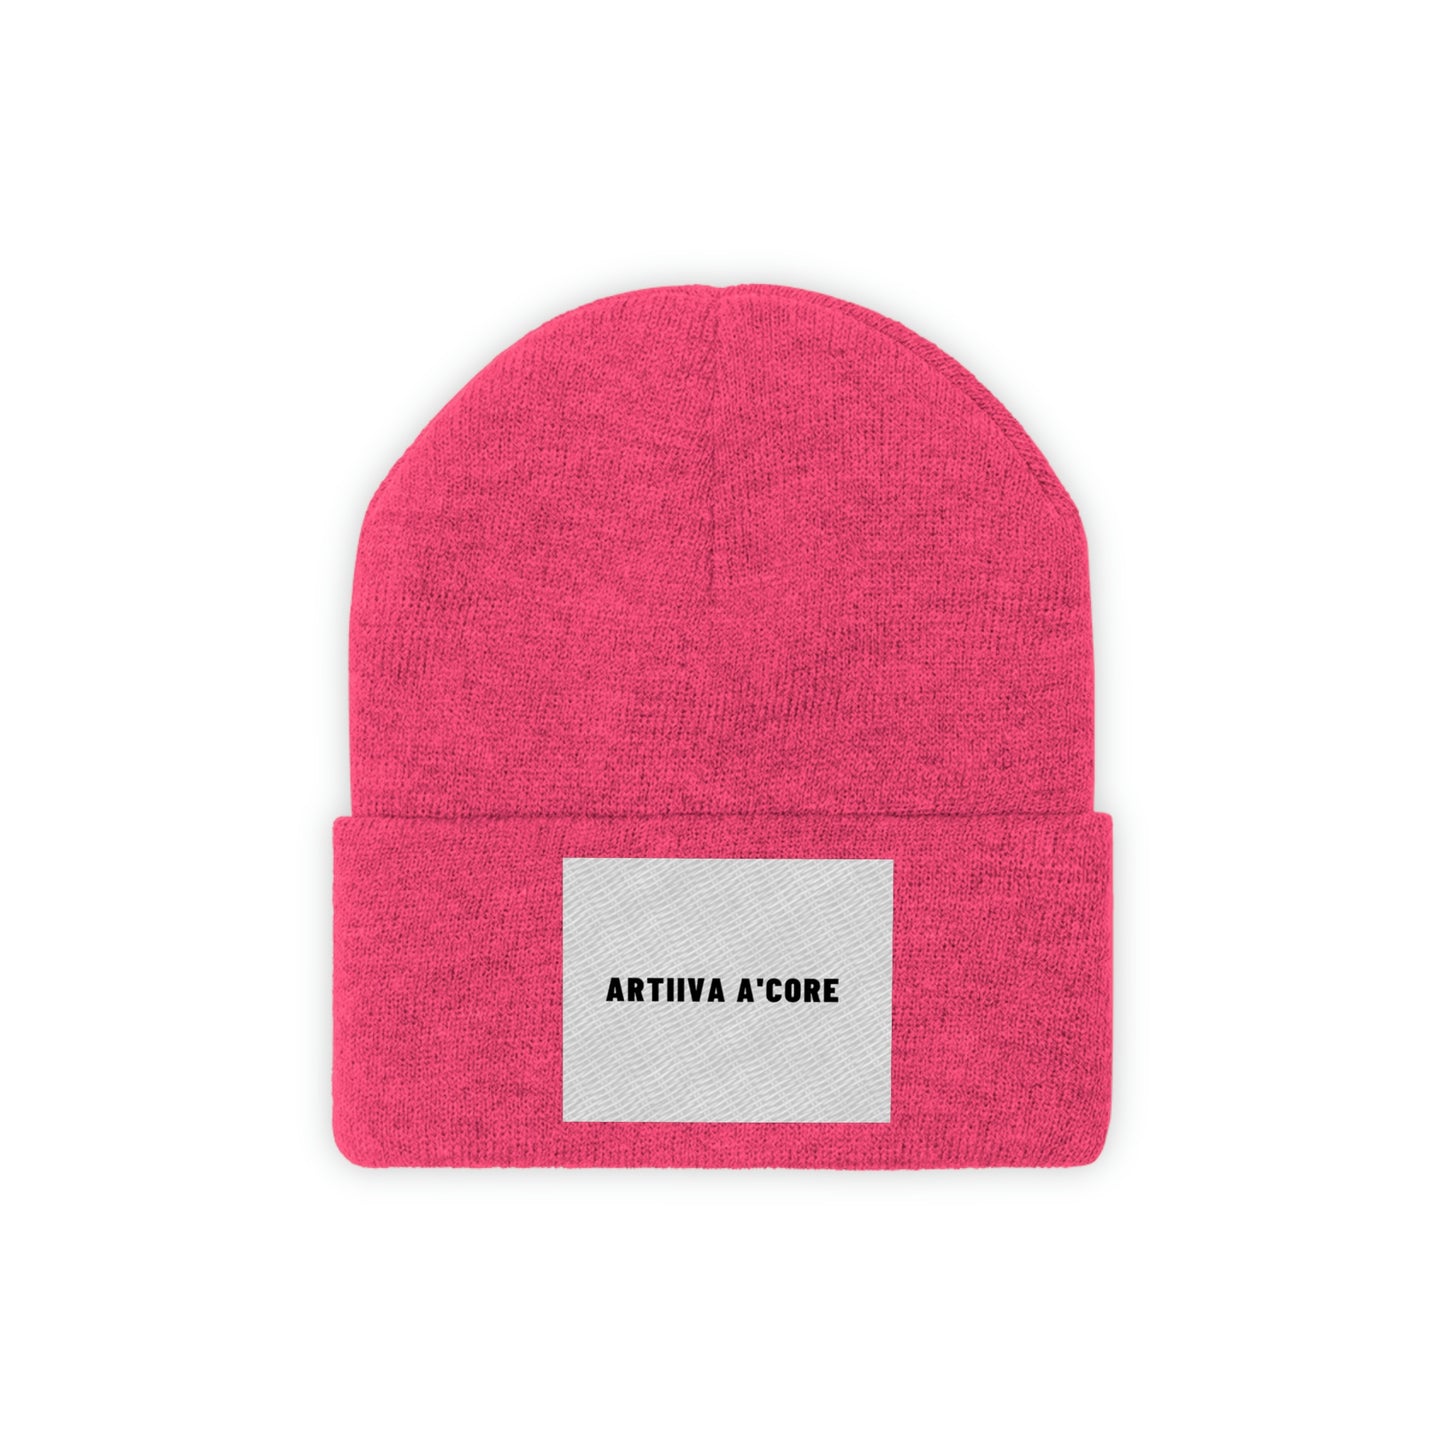 Artiiva A'core Knit Beanie - Neon Pink